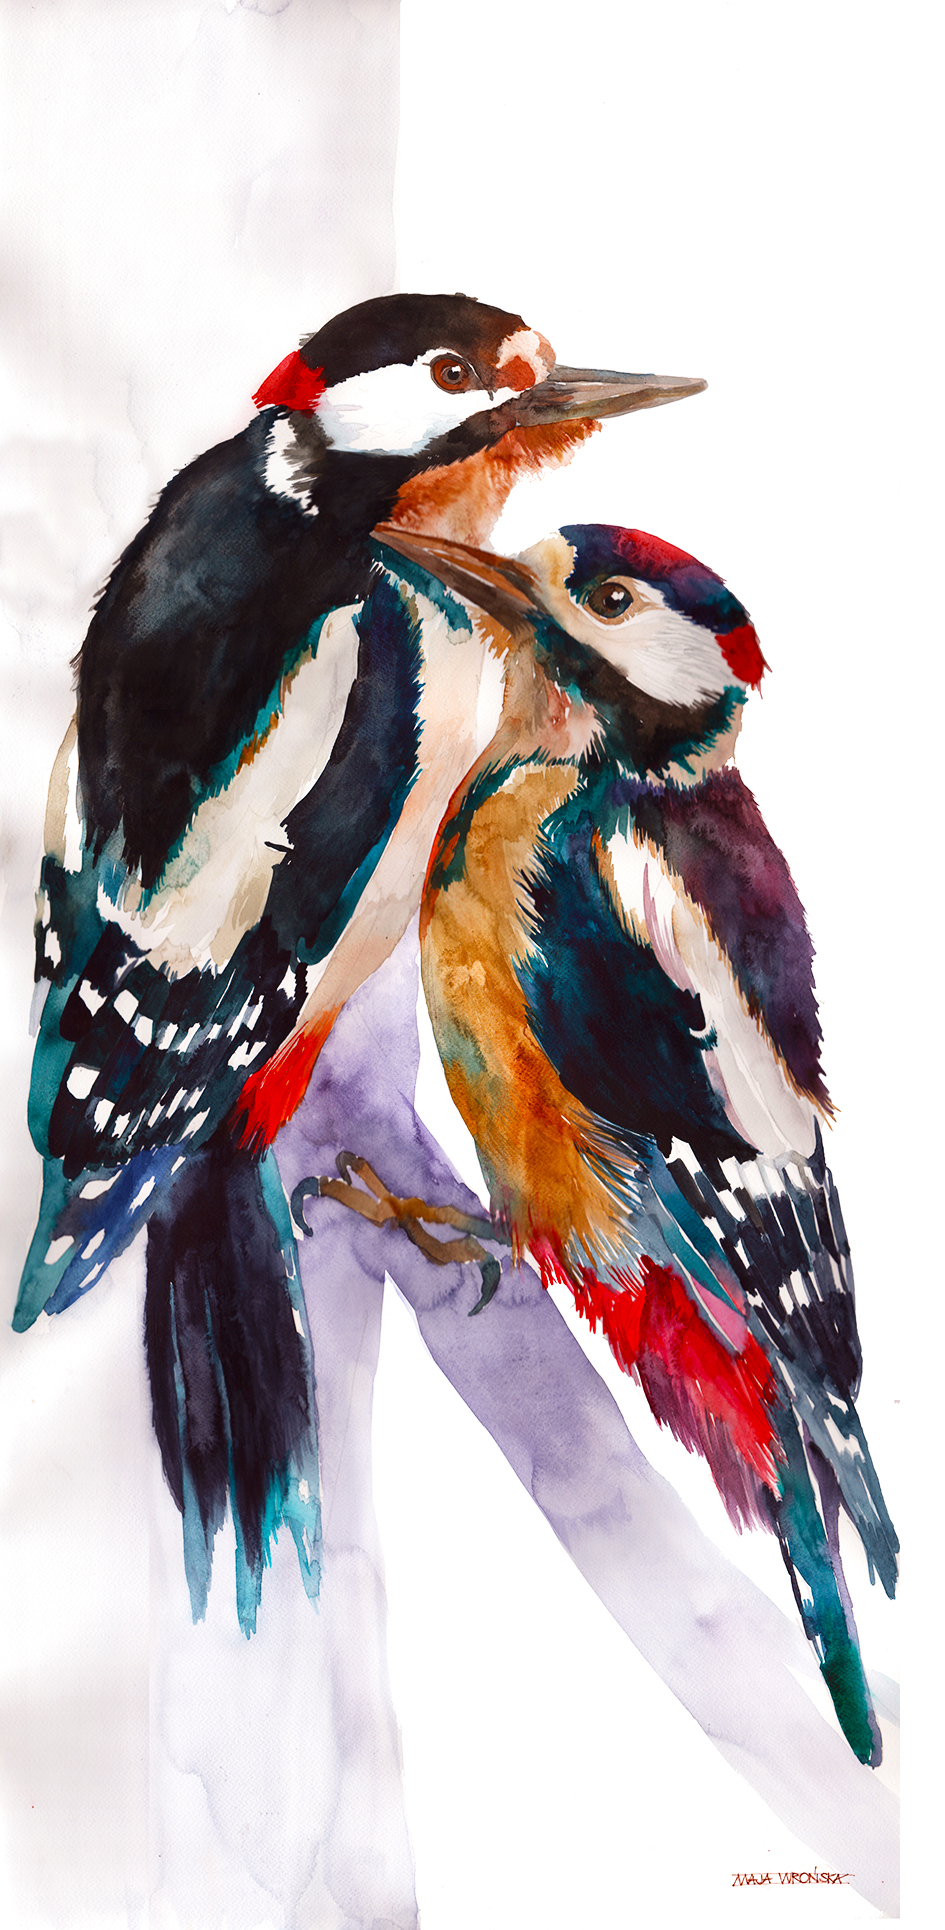 bird birds watercolor majawronska maja wronska takmaj Architectural watercolors watercolour watercolors cute colors